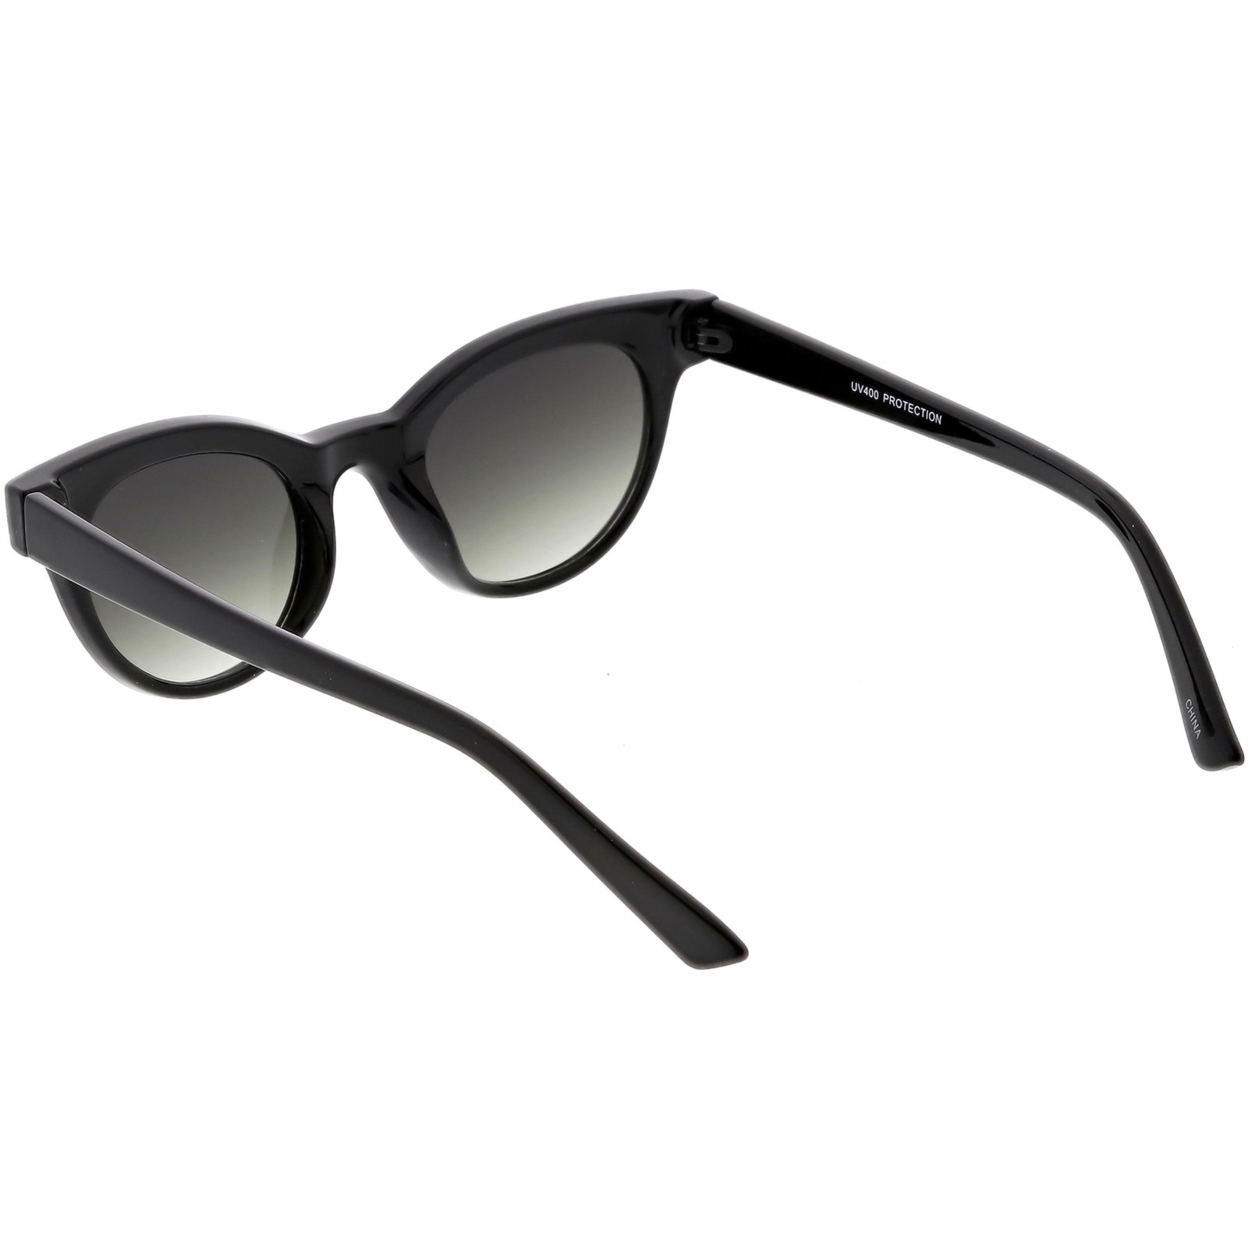 Women's Horn Rimmed Cat Eye Sunglasses Neutral Colored Round Lens Cat Eye Sunglasses 47mm - Shiny Red / Smoke